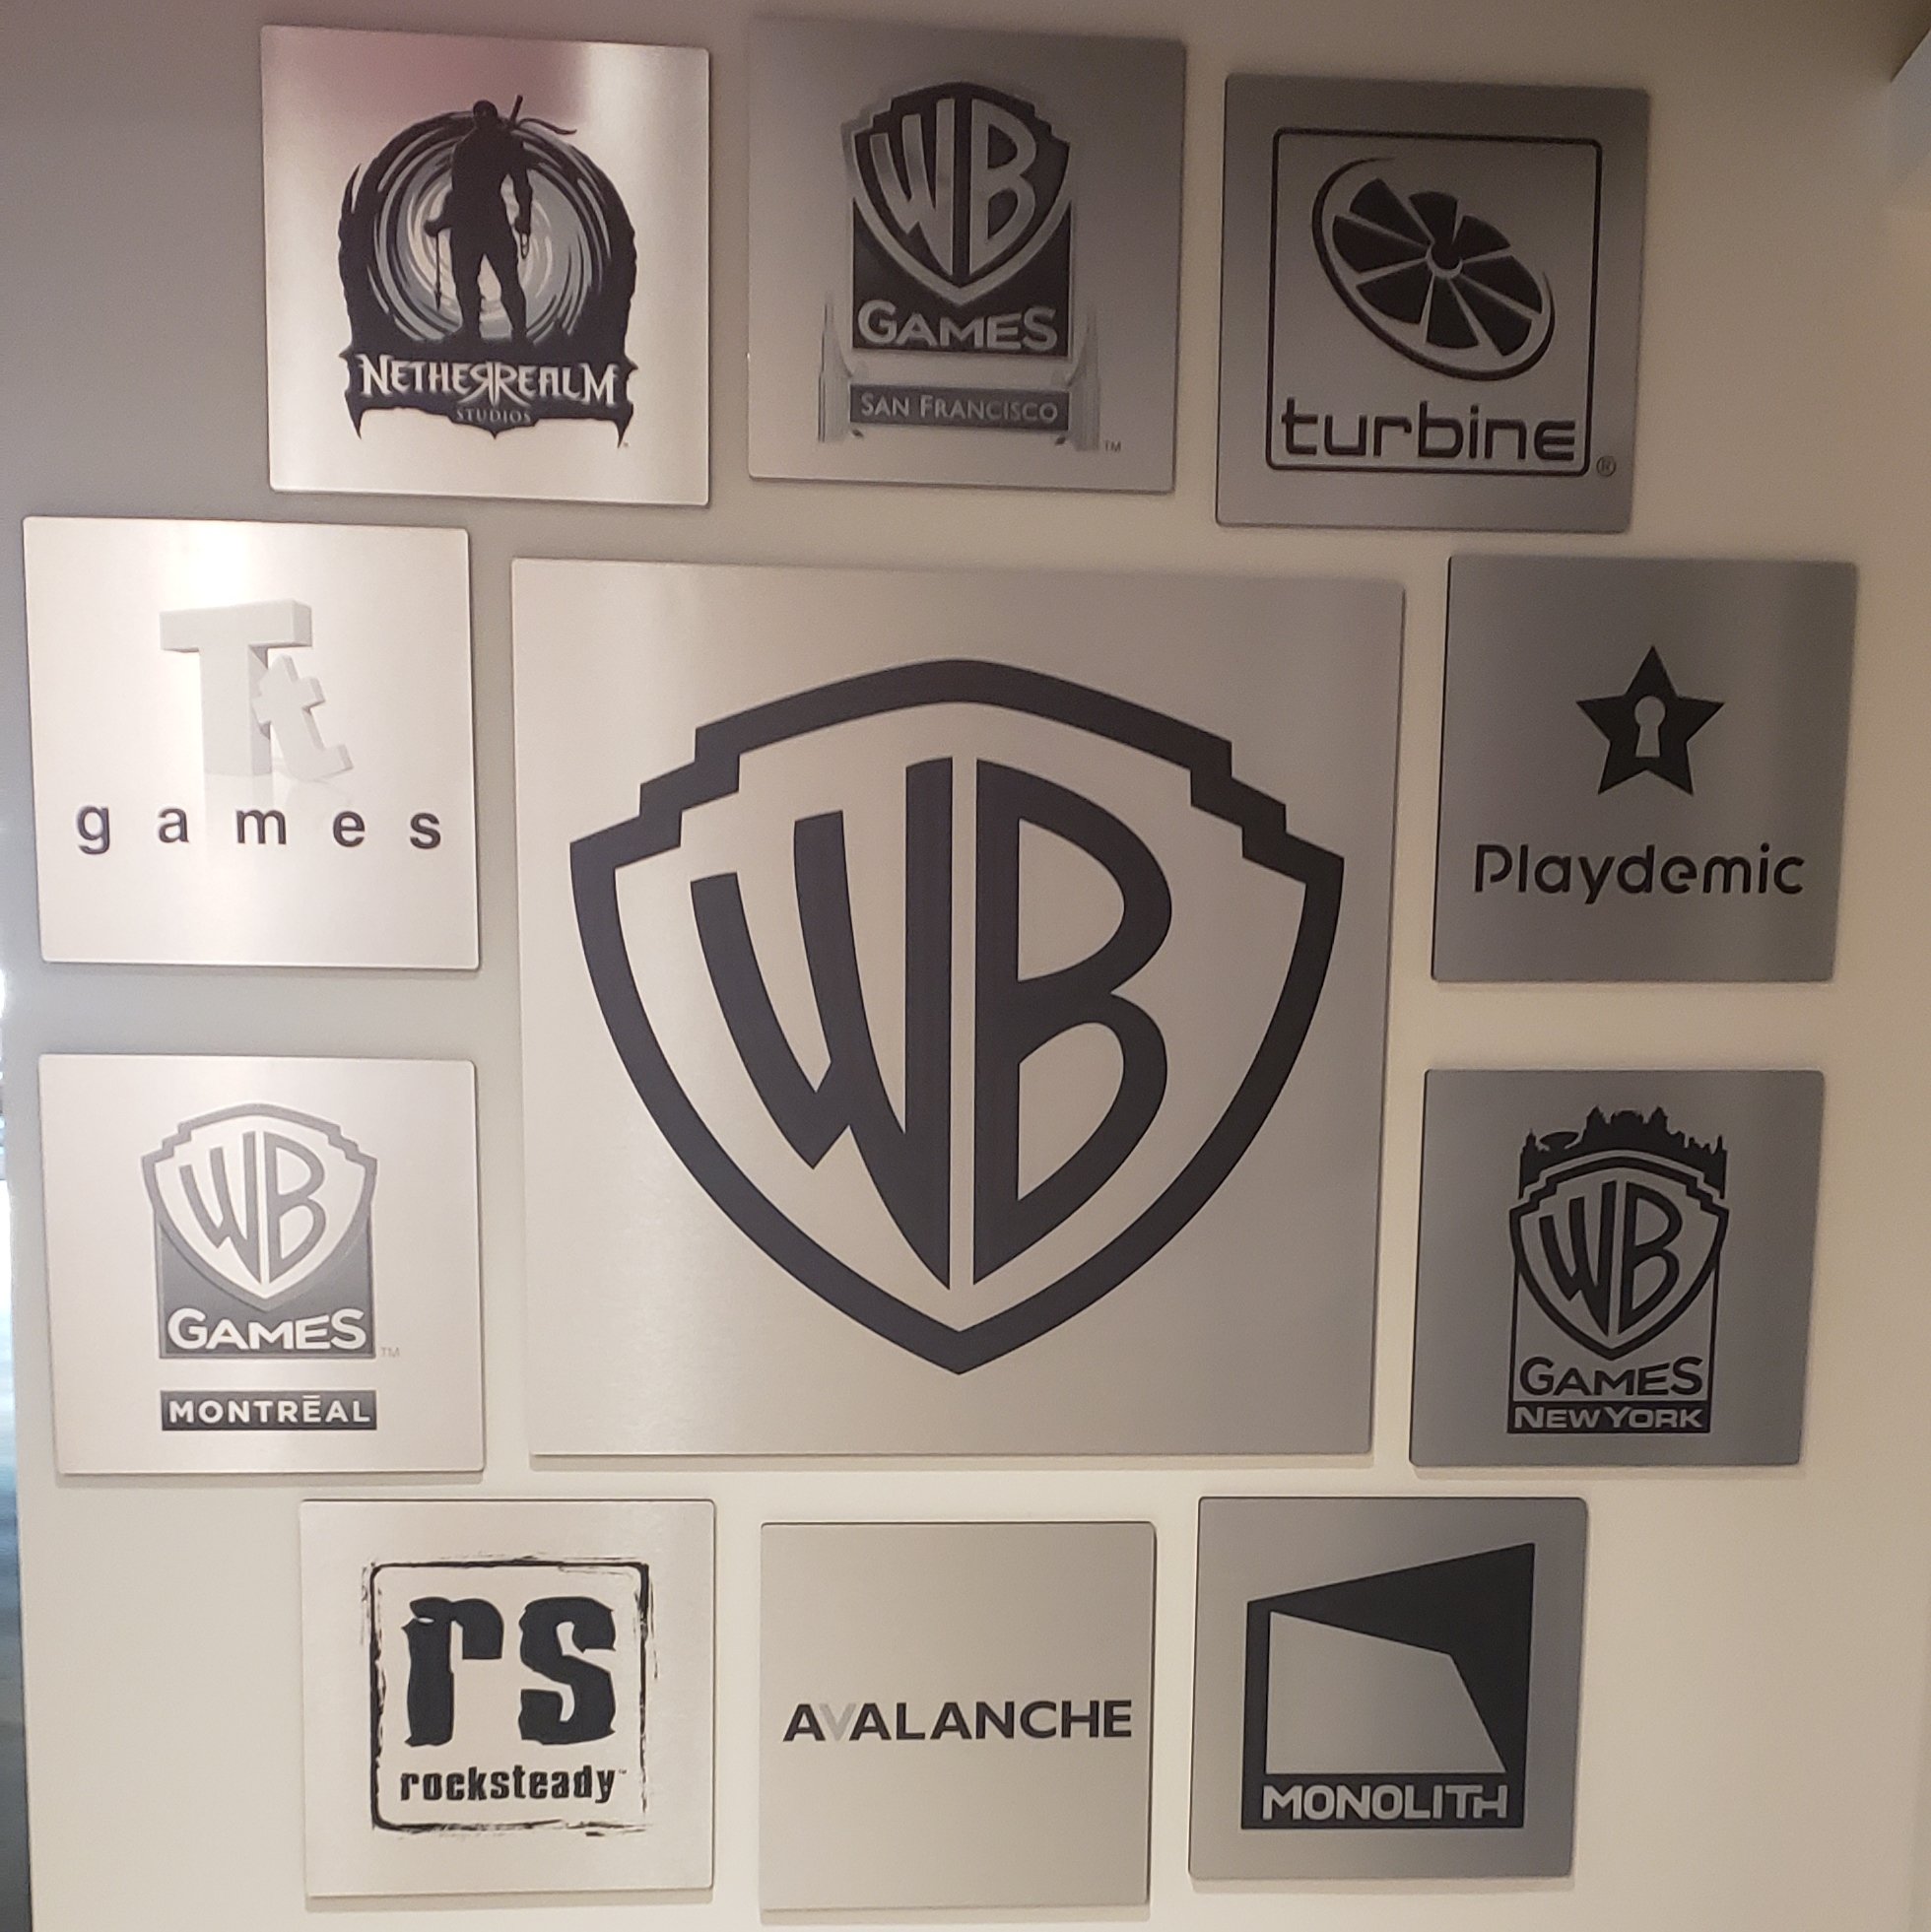 Warner Bros. Interactive Entertainment game studio is no longer